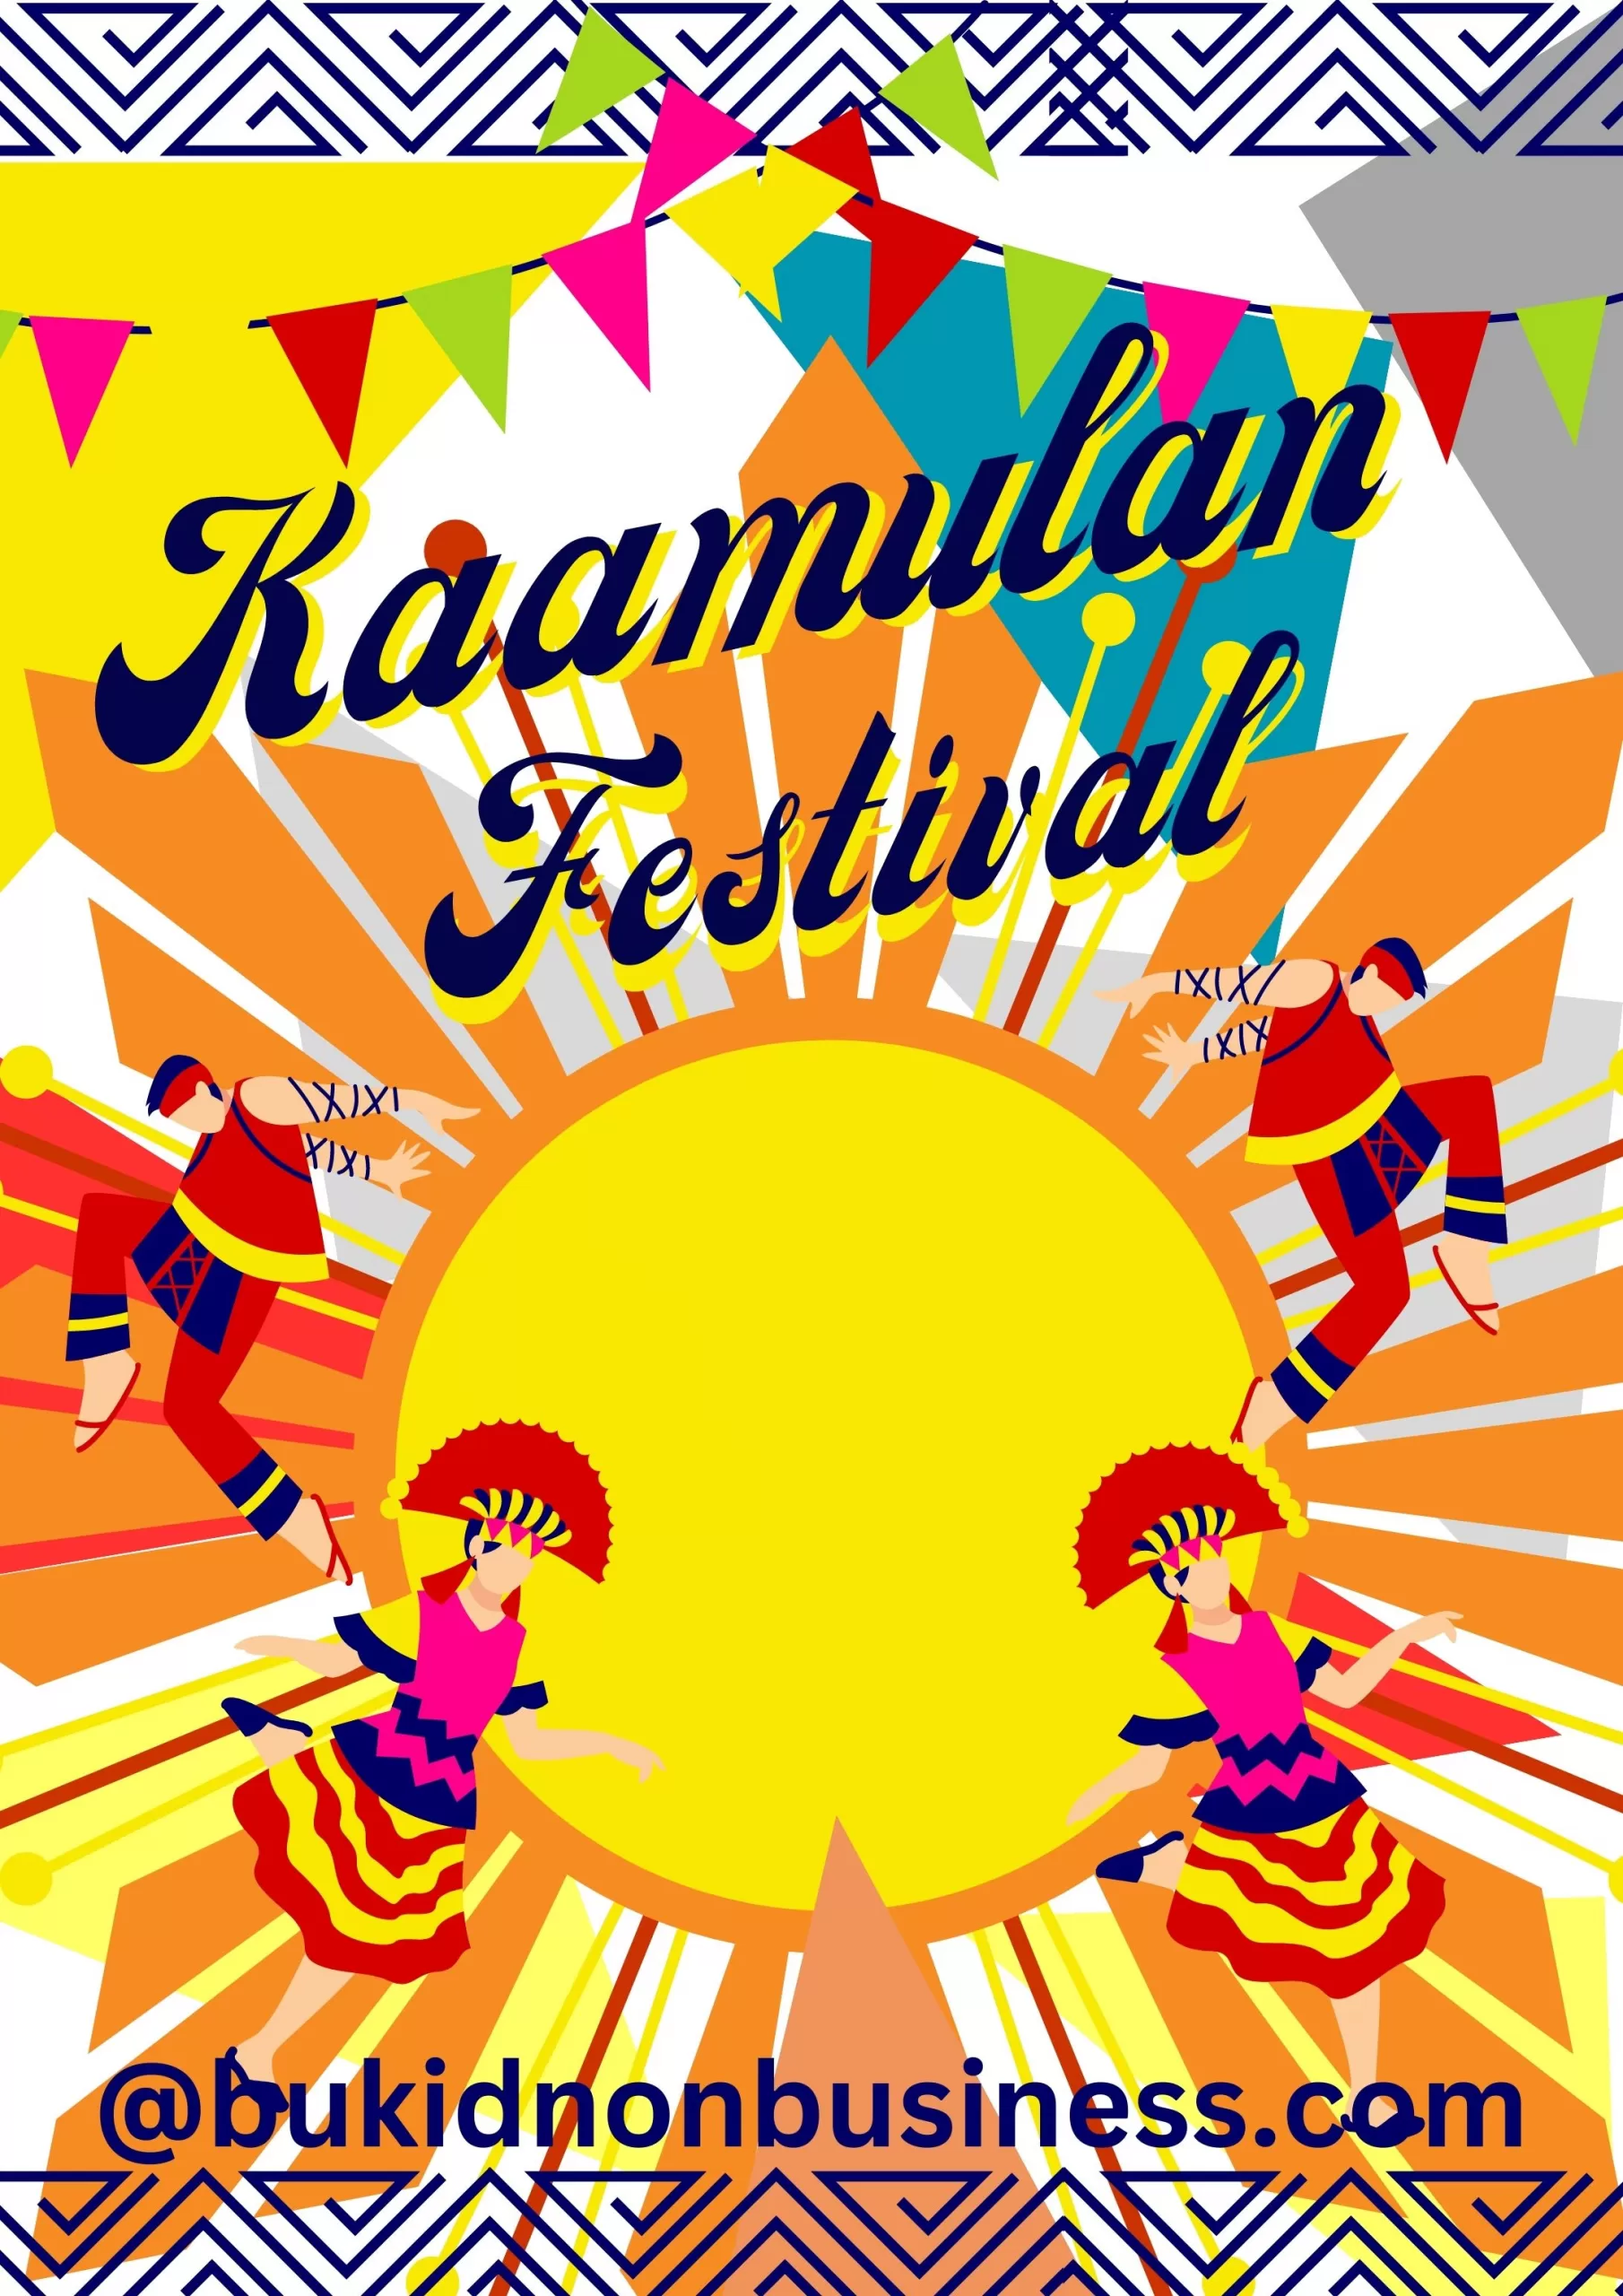 Bukidnon-Business-Kaamulan-Festival